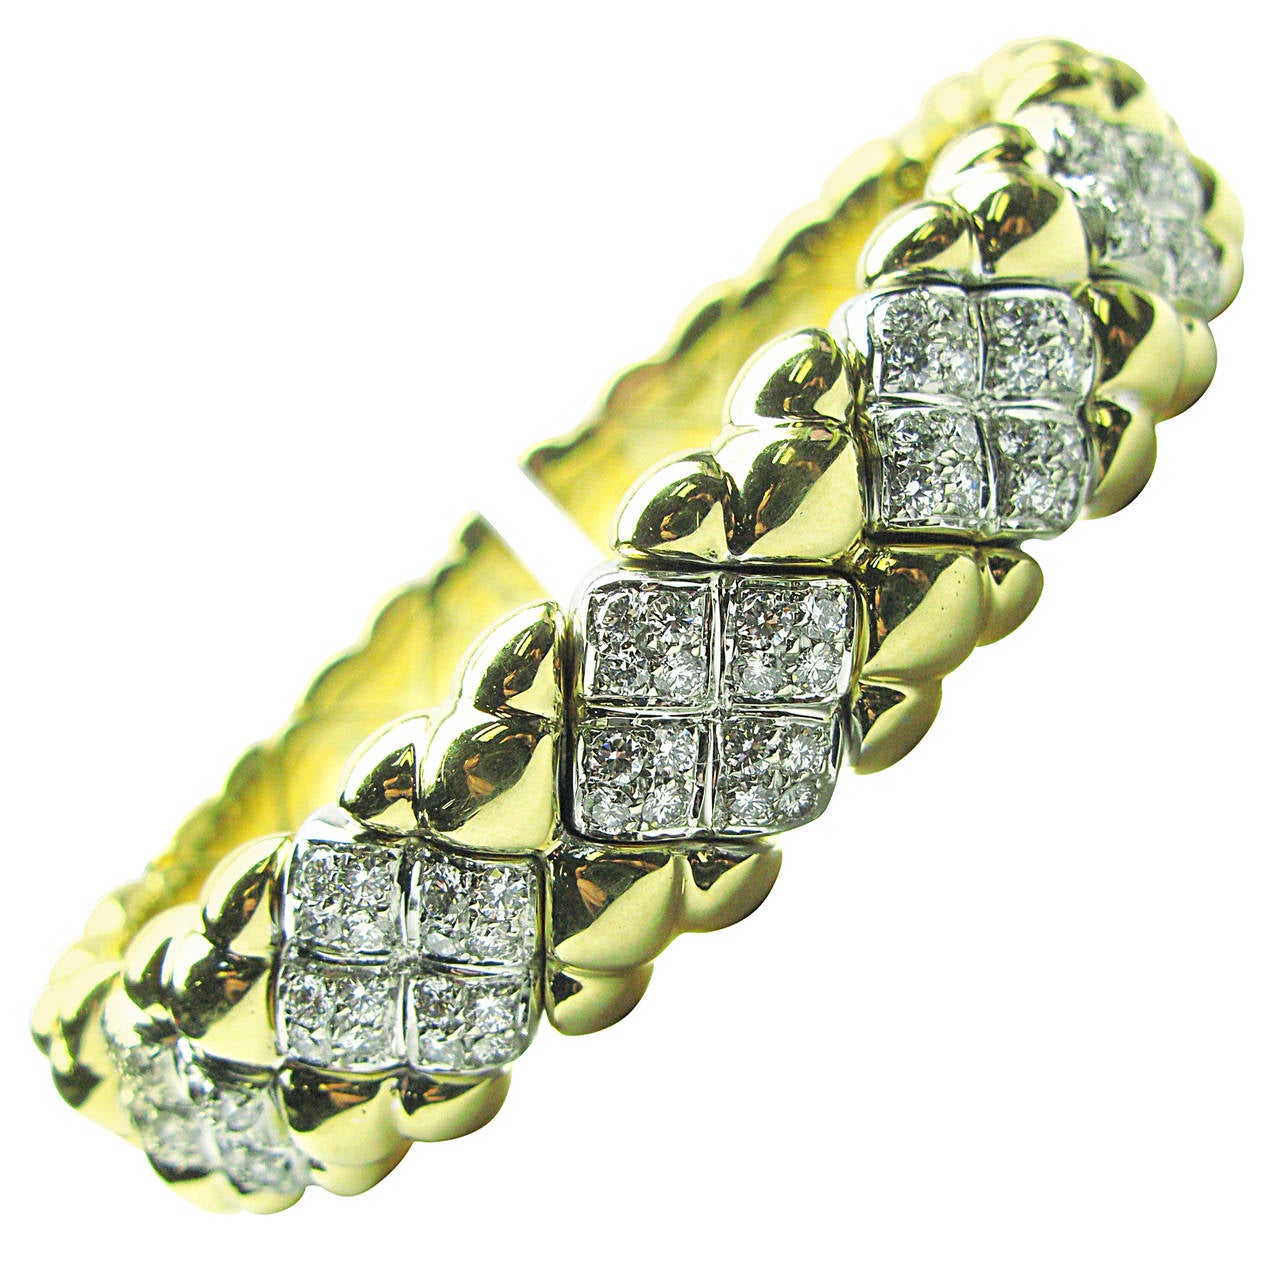 Italian Diamond Gold Cuff Bracelet